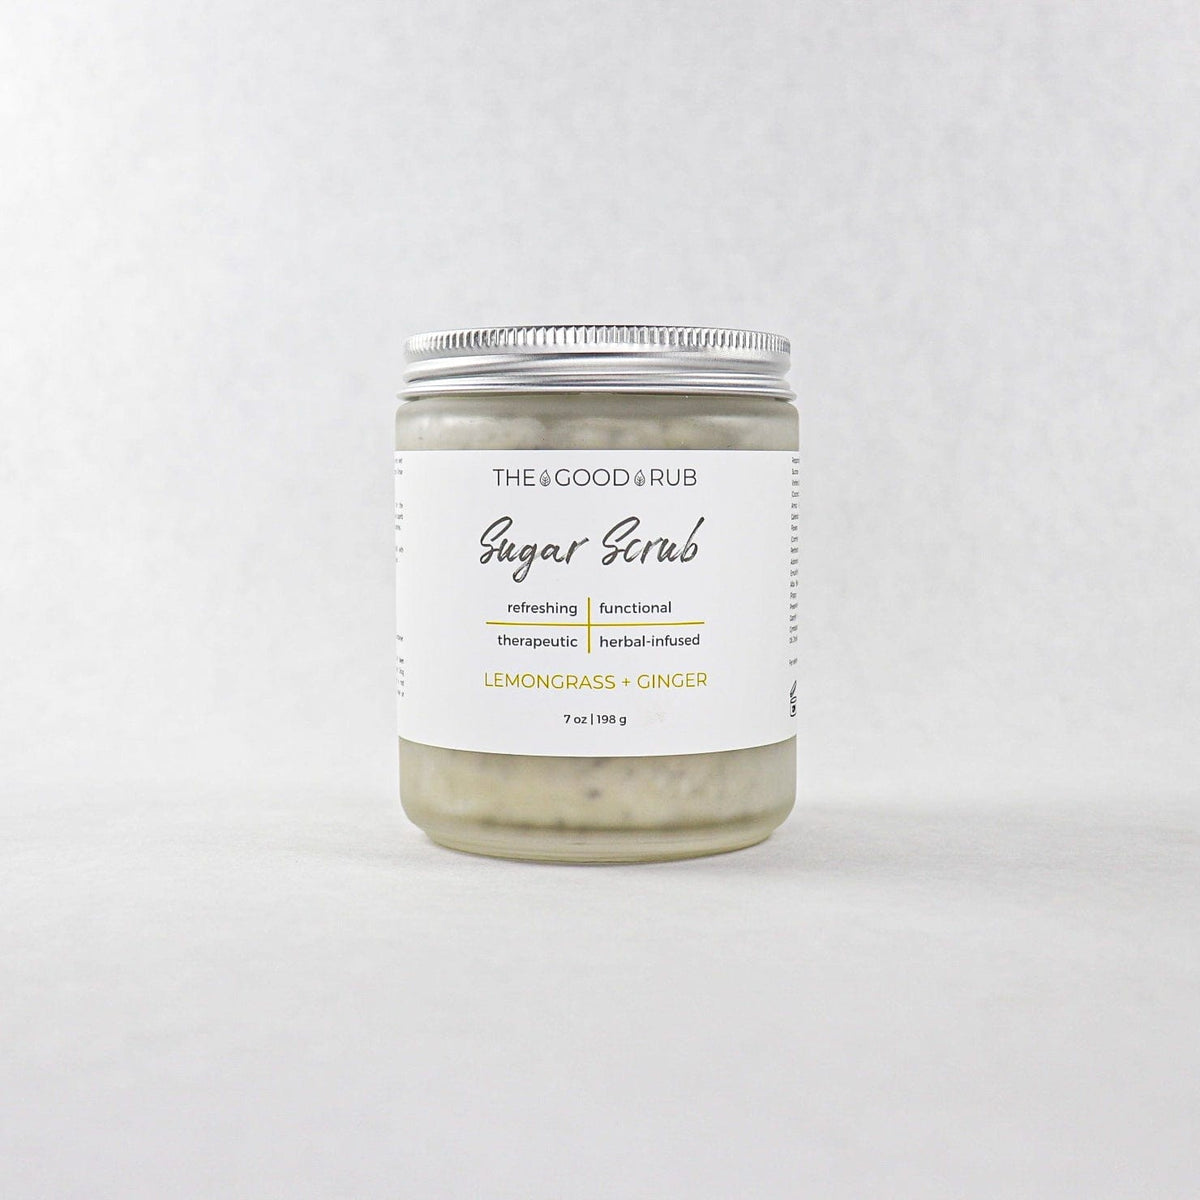 Lemongrass & Ginger Sugar Scrub | The Good Rub